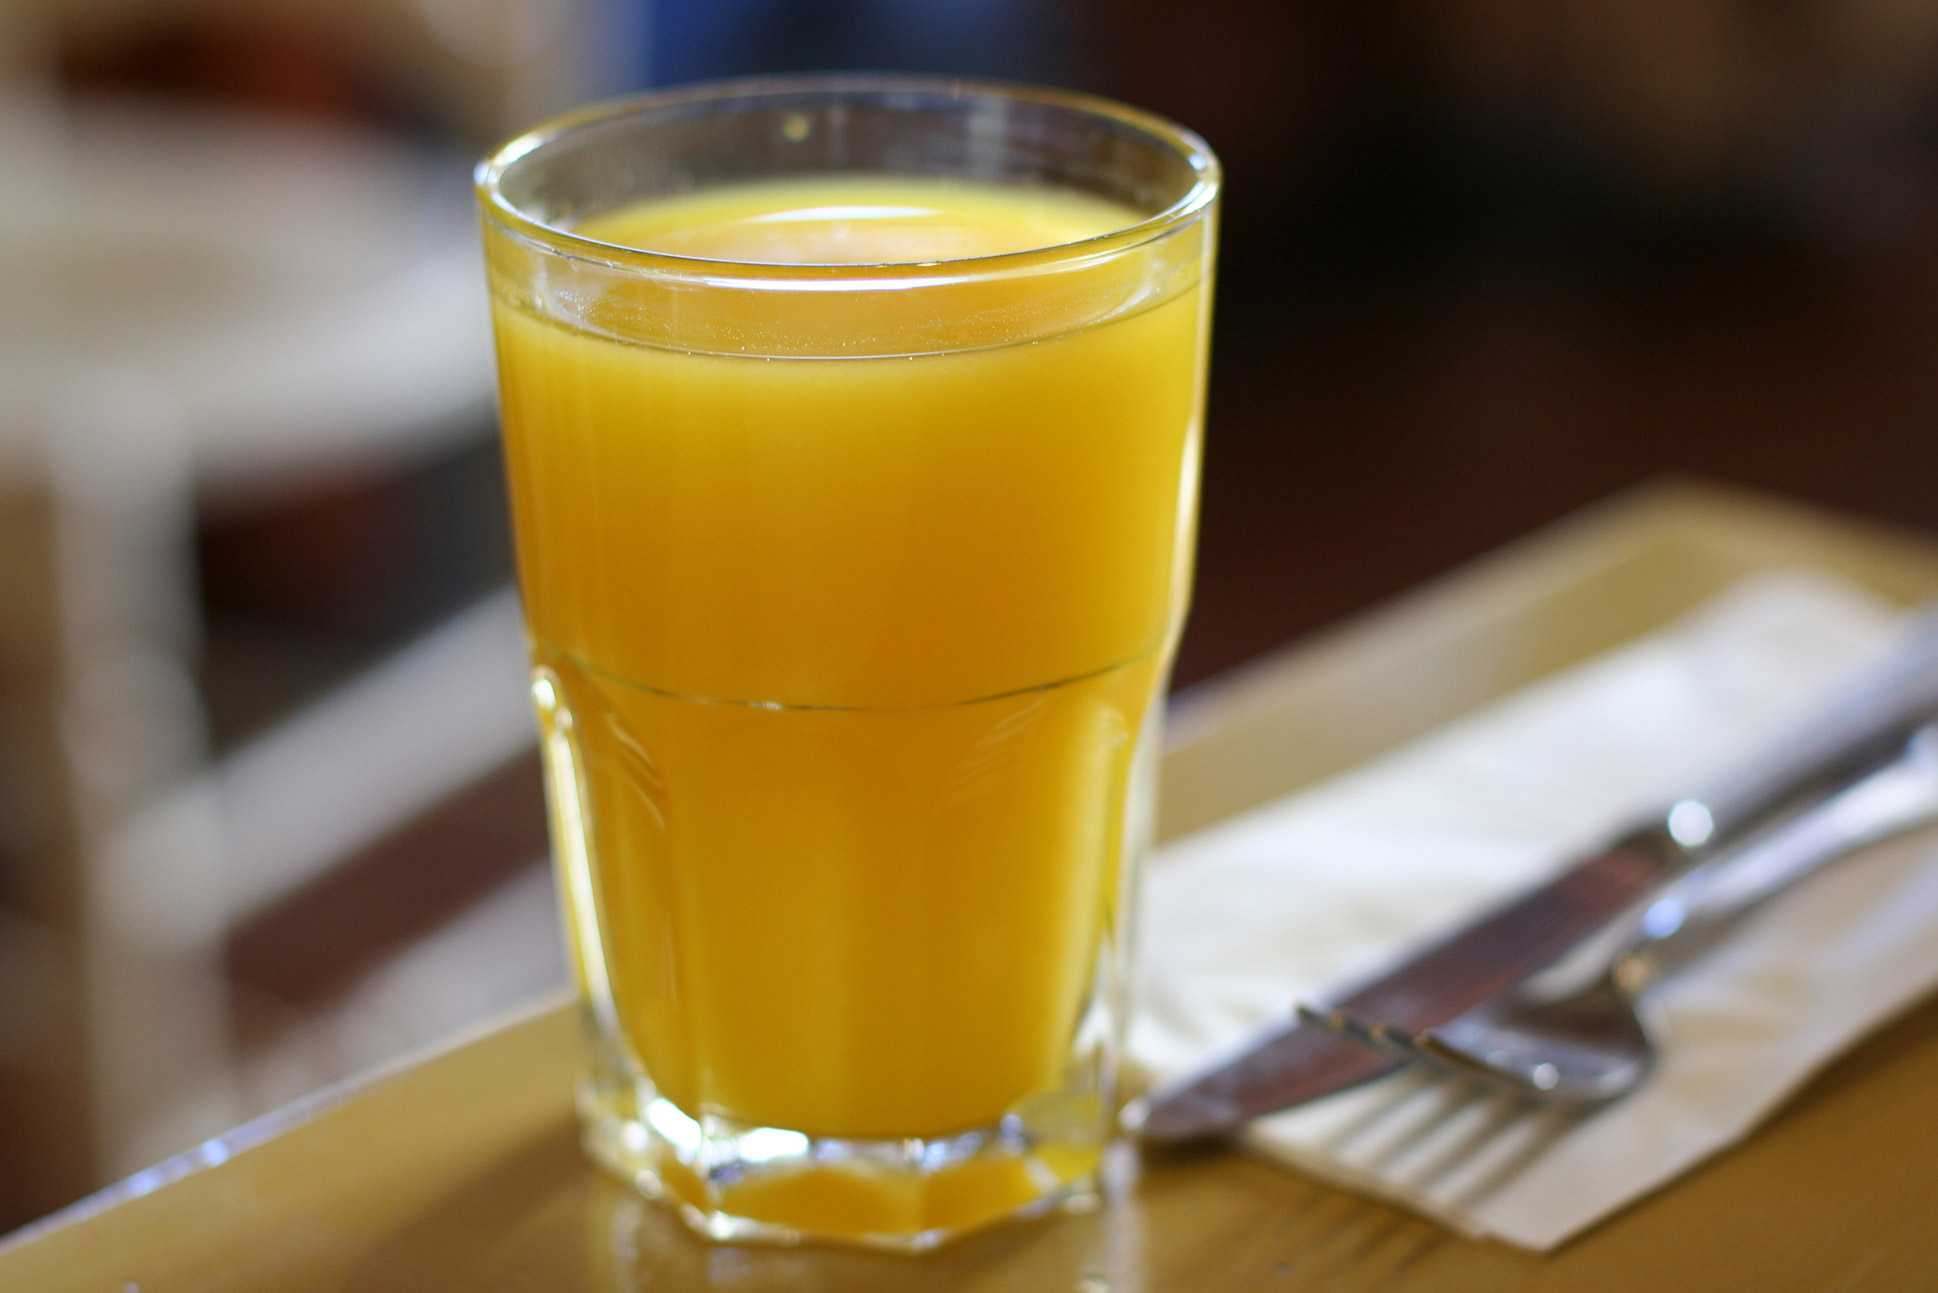 Getting Smart About Orange Juice